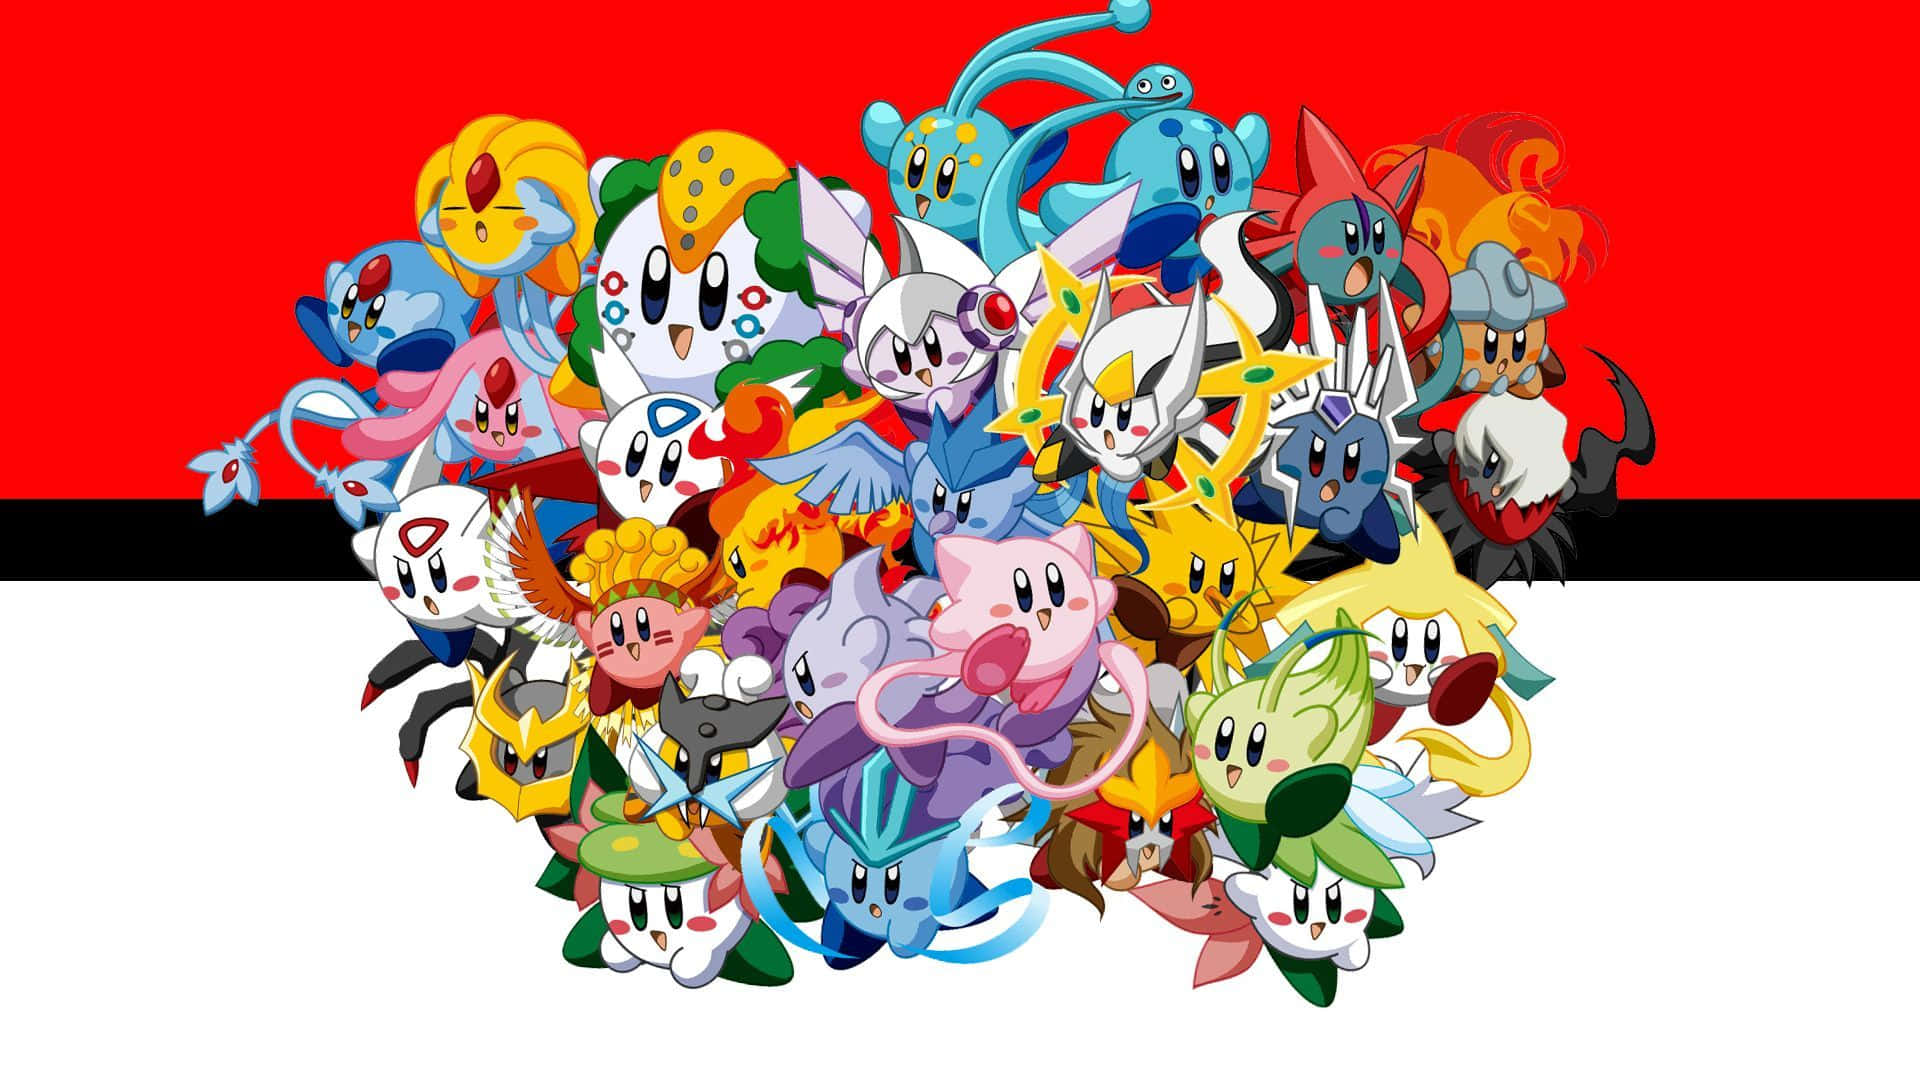 Pokemon-karakterer på en rød og hvid baggrund